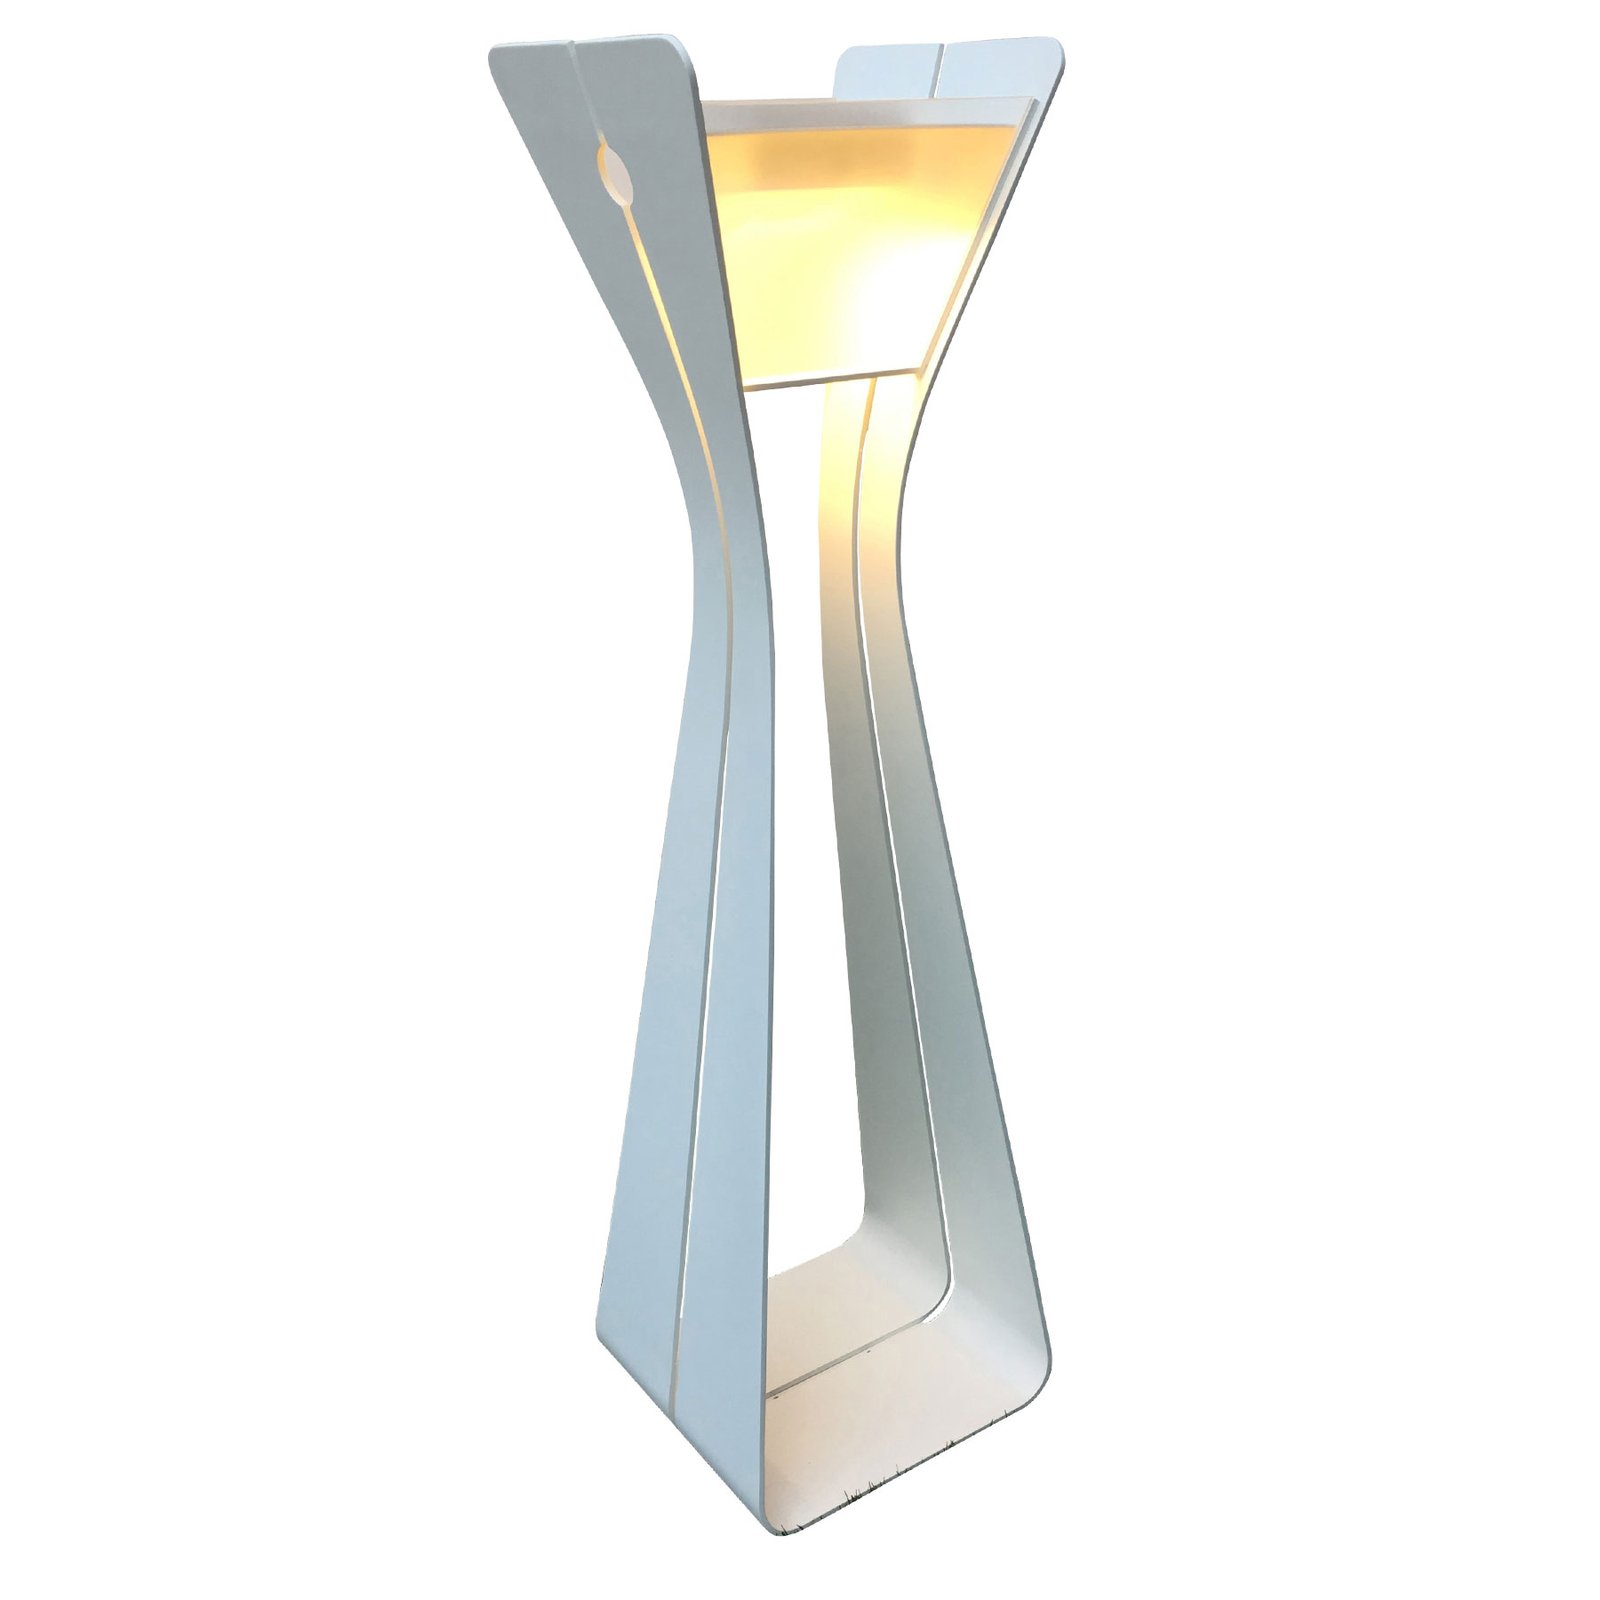 LED lamp op zonne-energie Osmoz van aluminium, wit